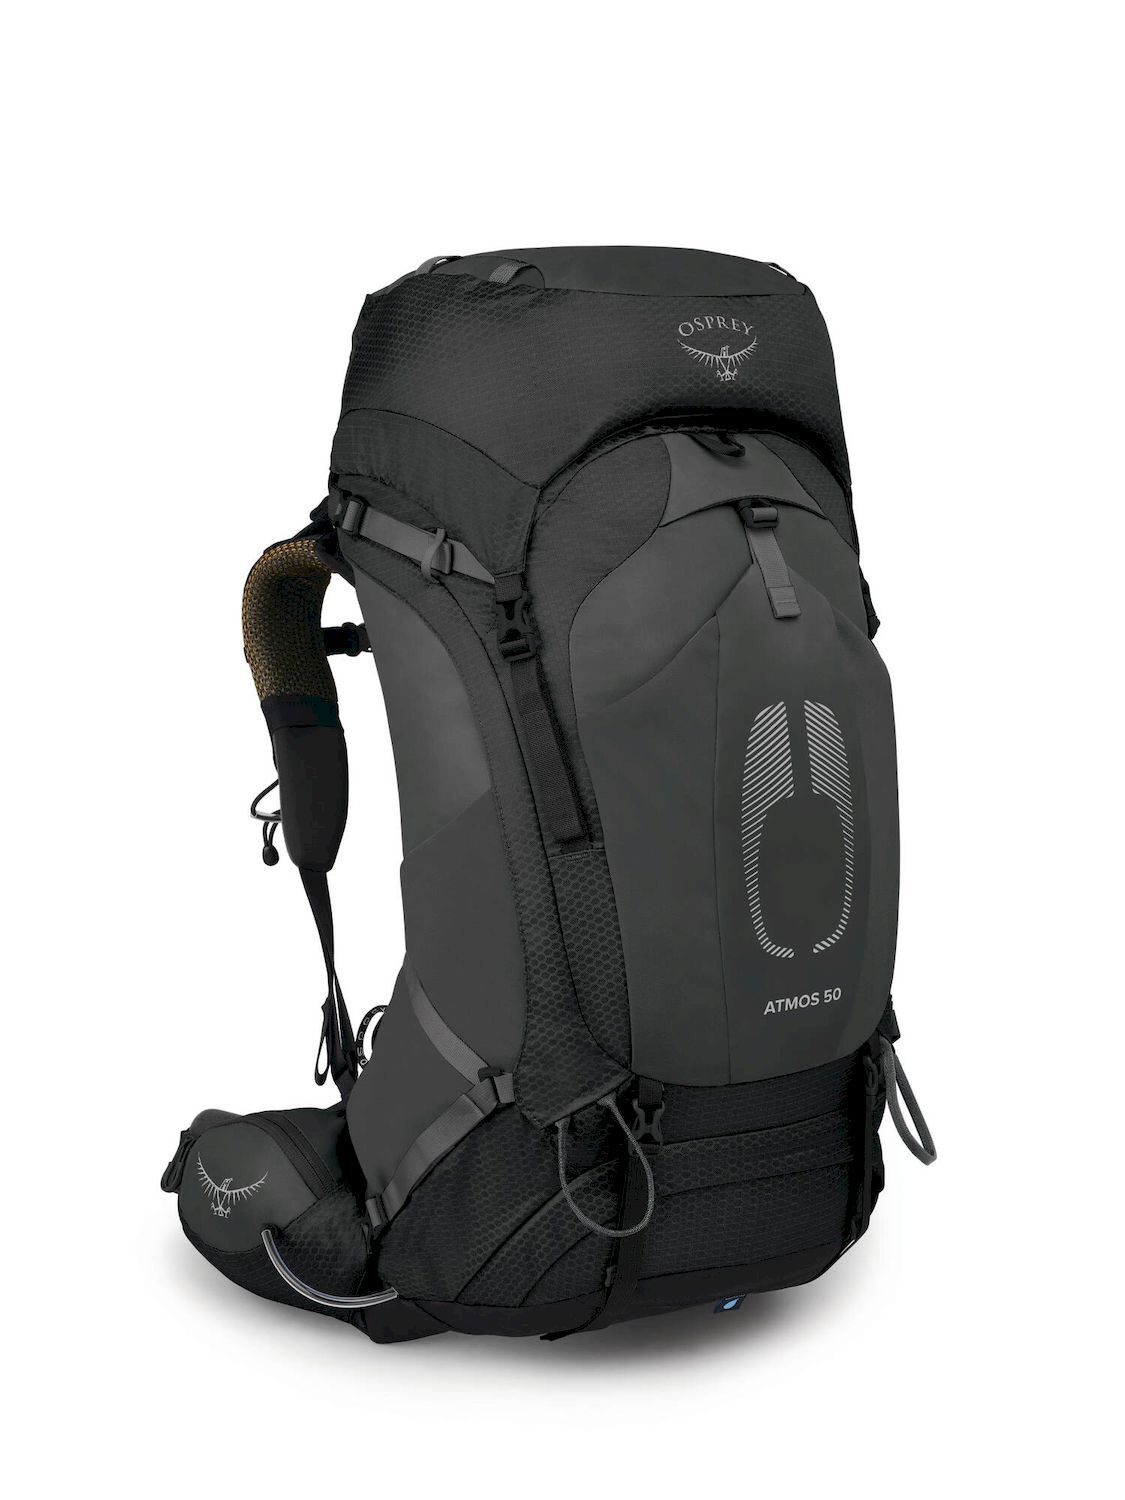 Osprey Atmos AG 50 - Hiking backpack - Men's